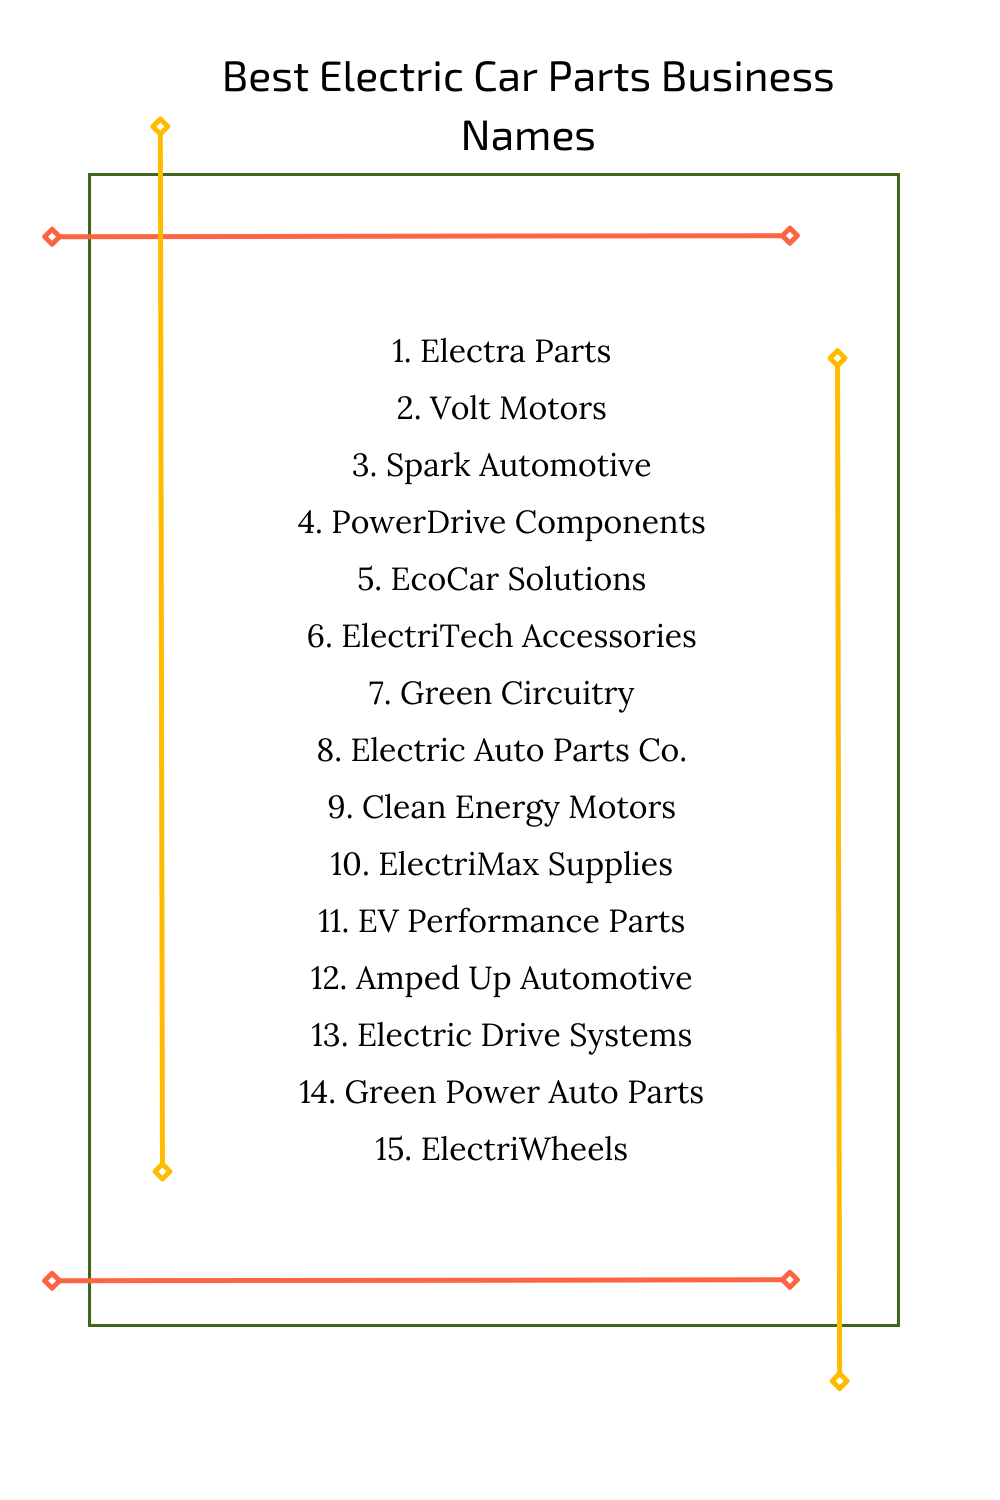 Best Electric Car Parts Business Names